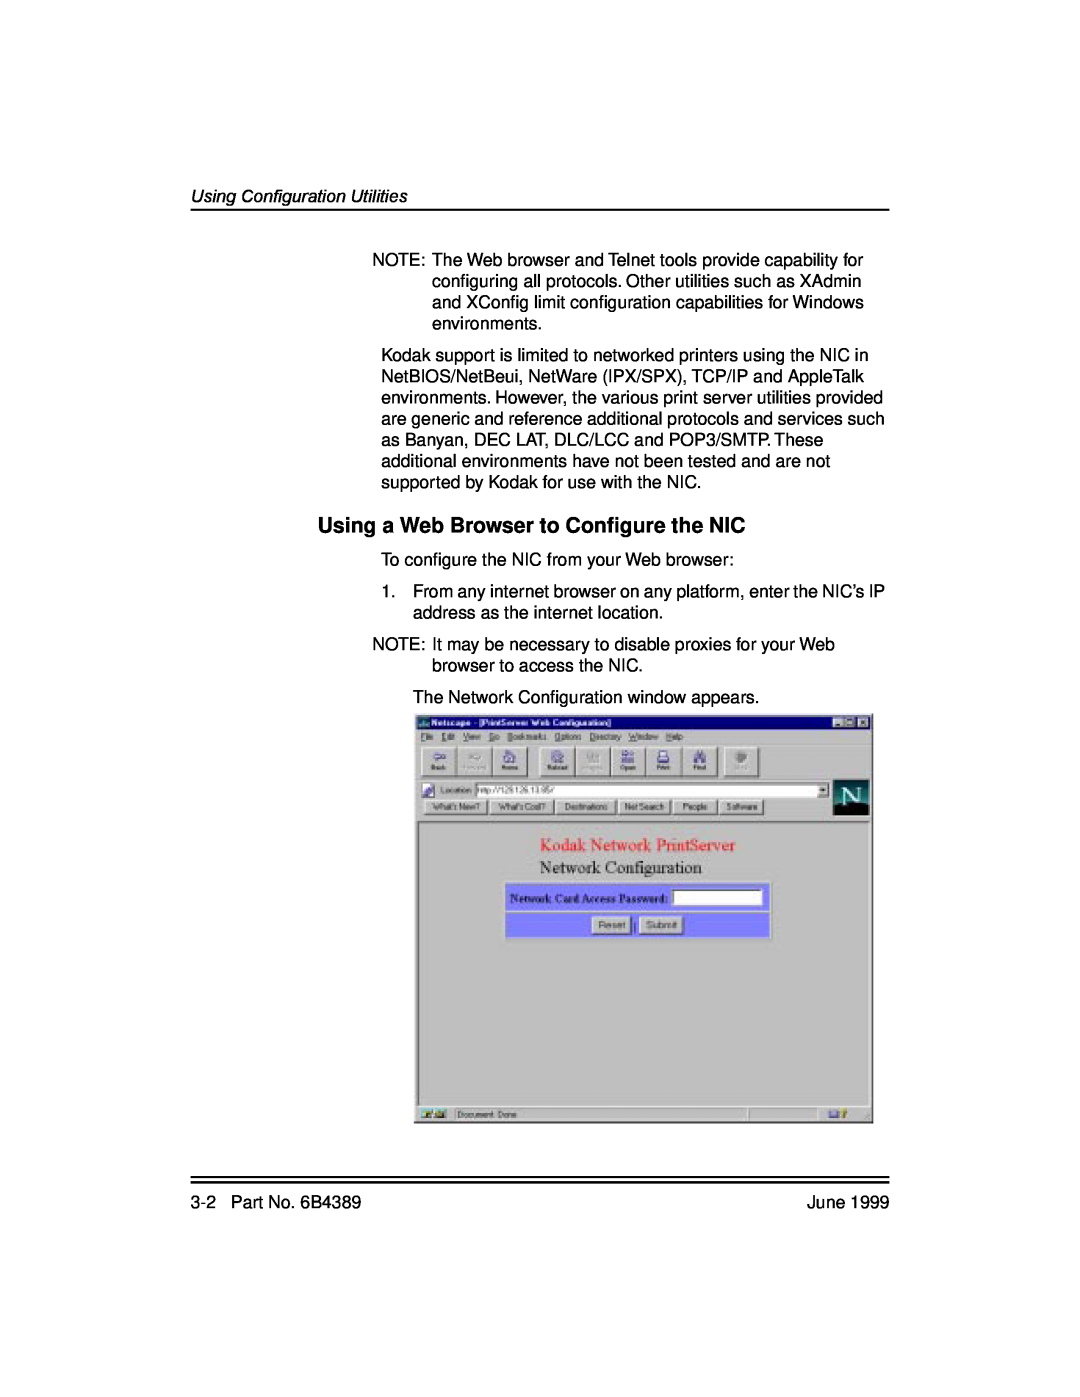 Kodak 8670, 8660 manual Using a Web Browser to Conﬁgure the NIC, Using Configuration Utilities 